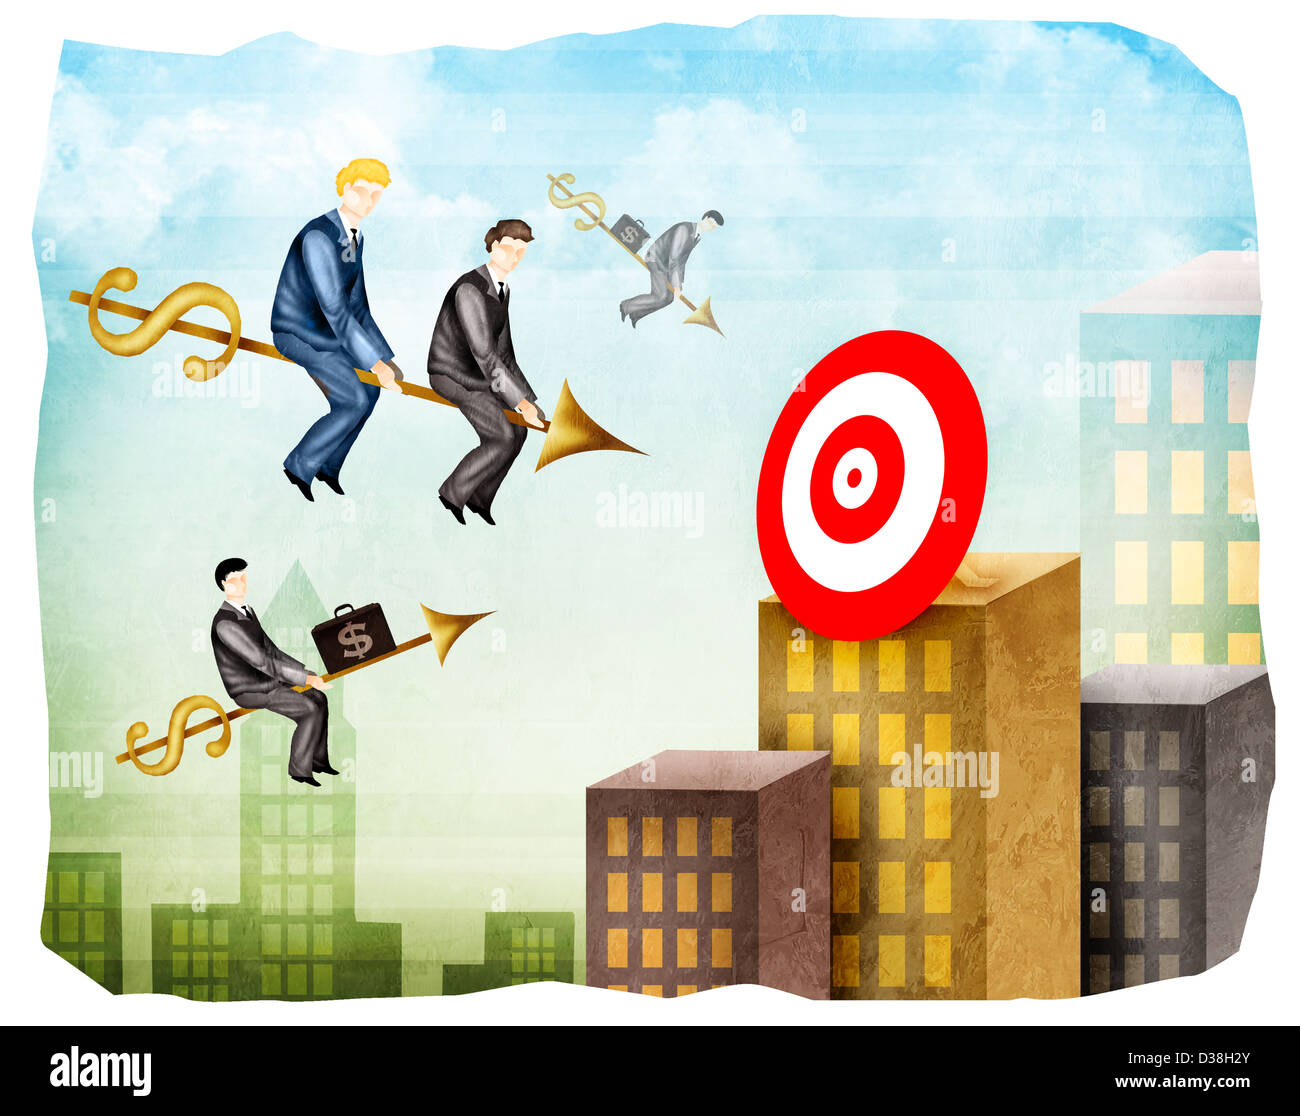 Sales executives reaching towards a target on arrows Stock Photo